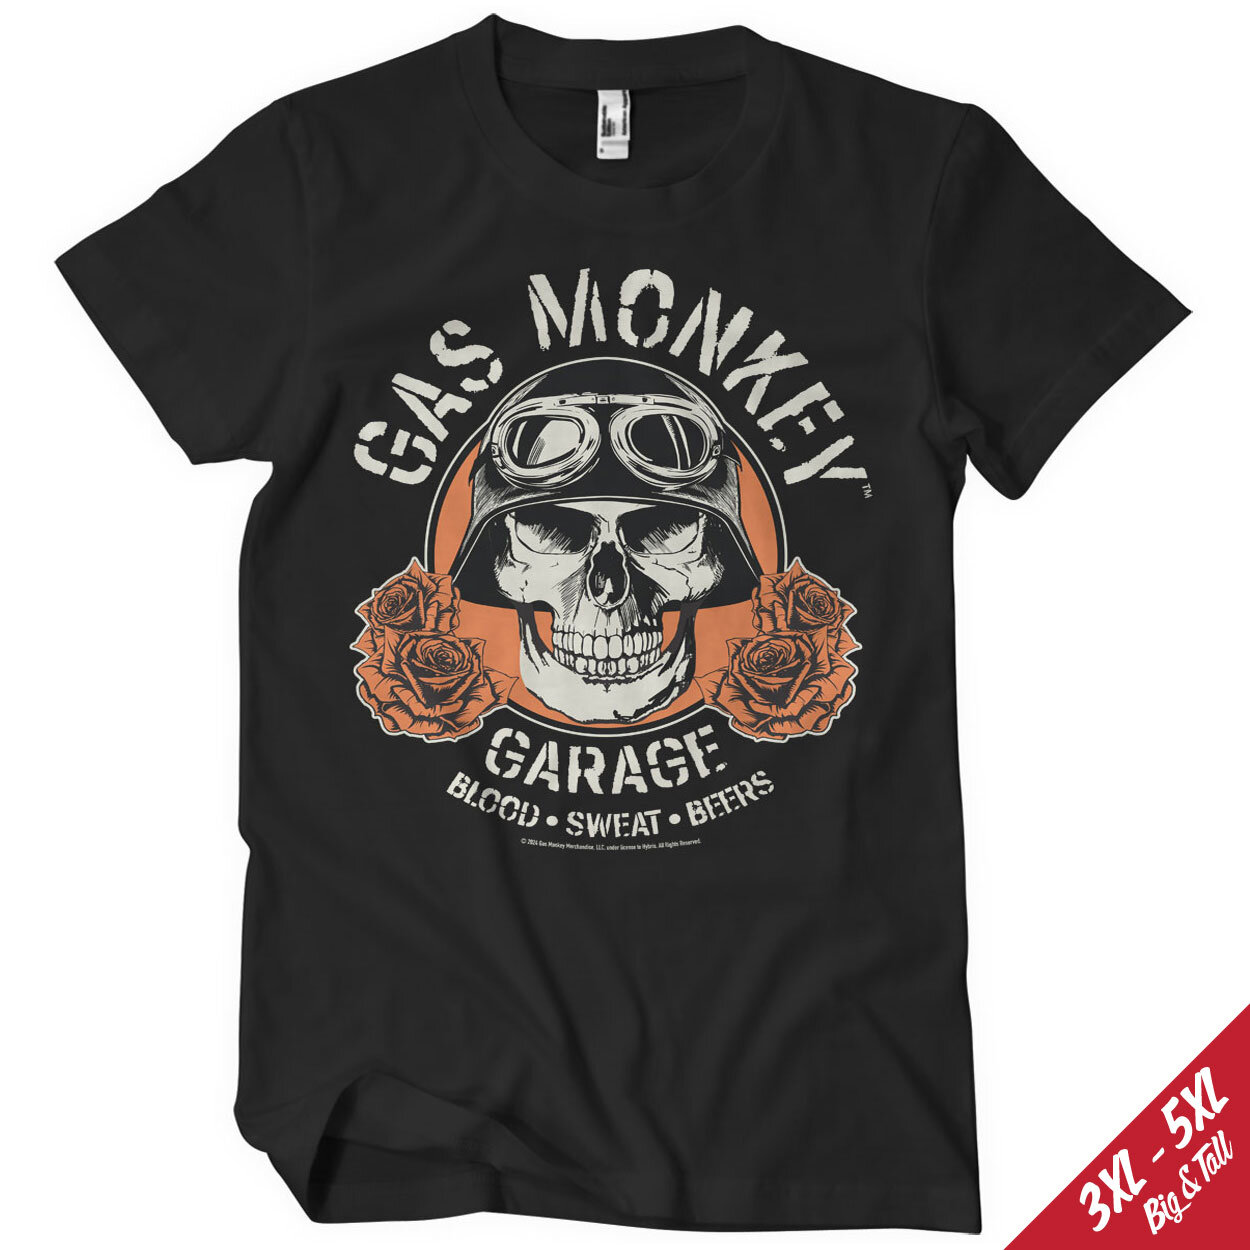 Gas Monkey Garage Skull Big & Tall T-Shirt